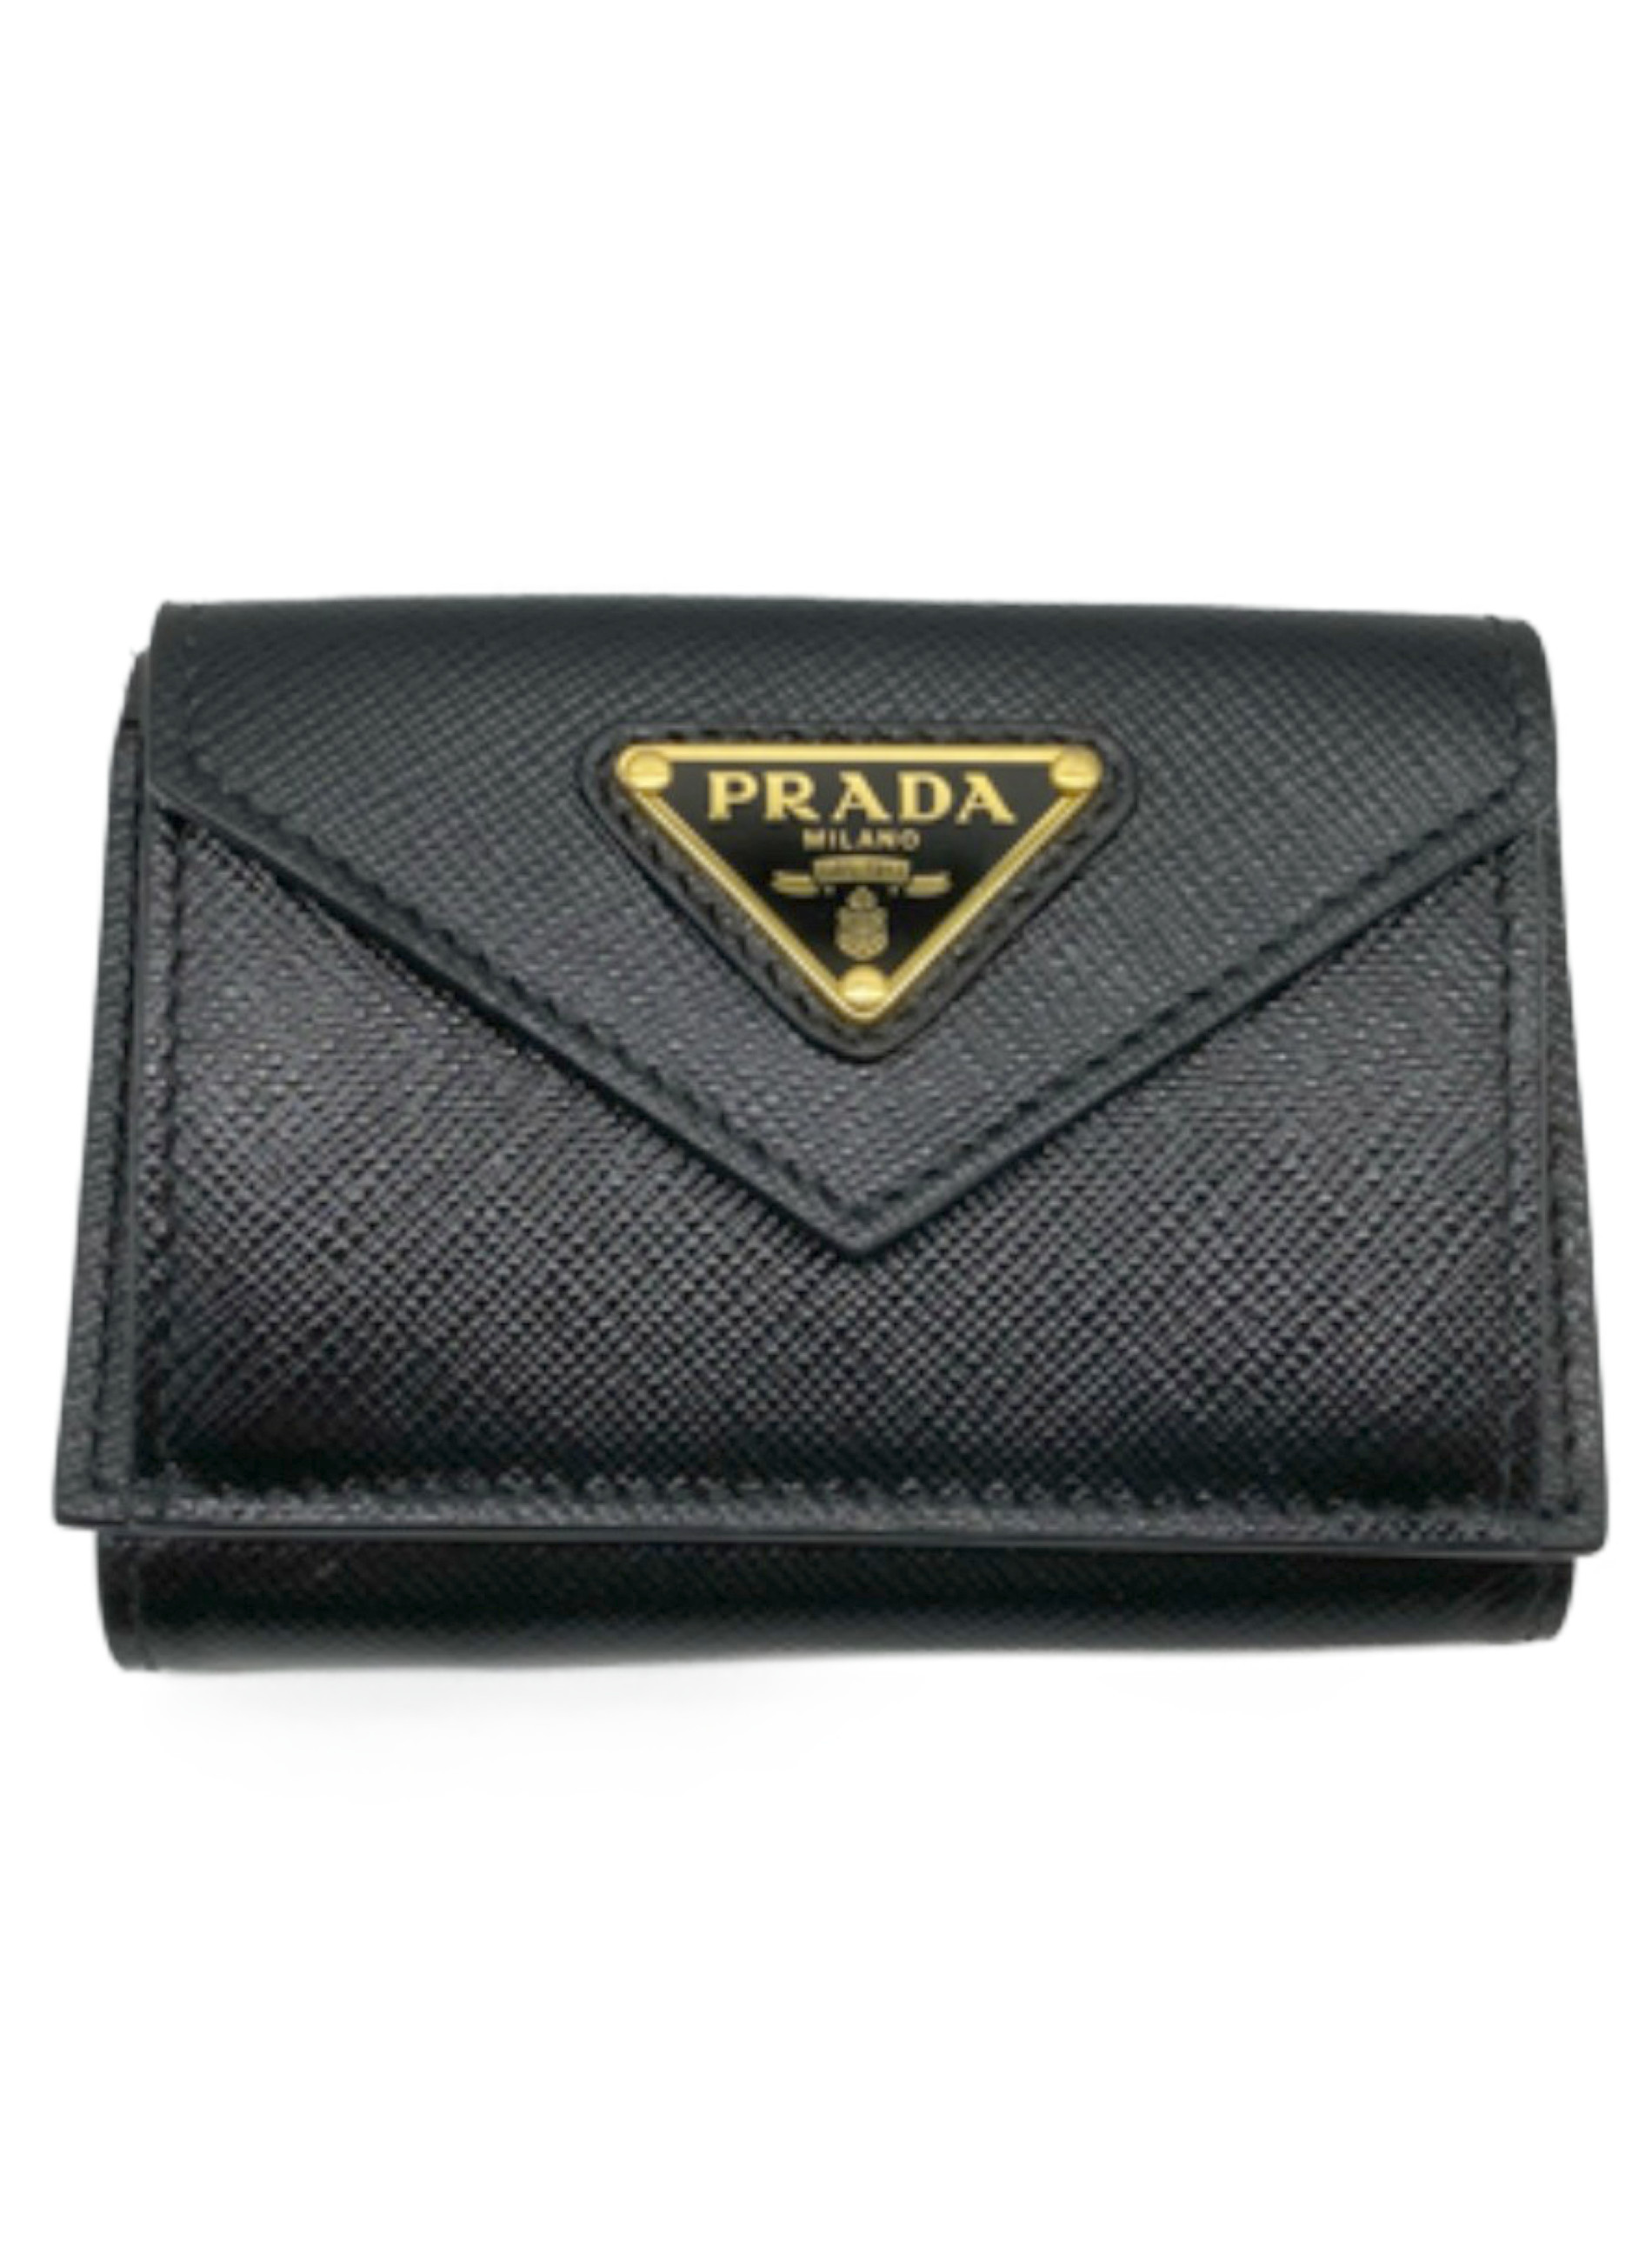 PRADA (プラダ) 3つ折り財布 サイズ:下記参照 1MH021